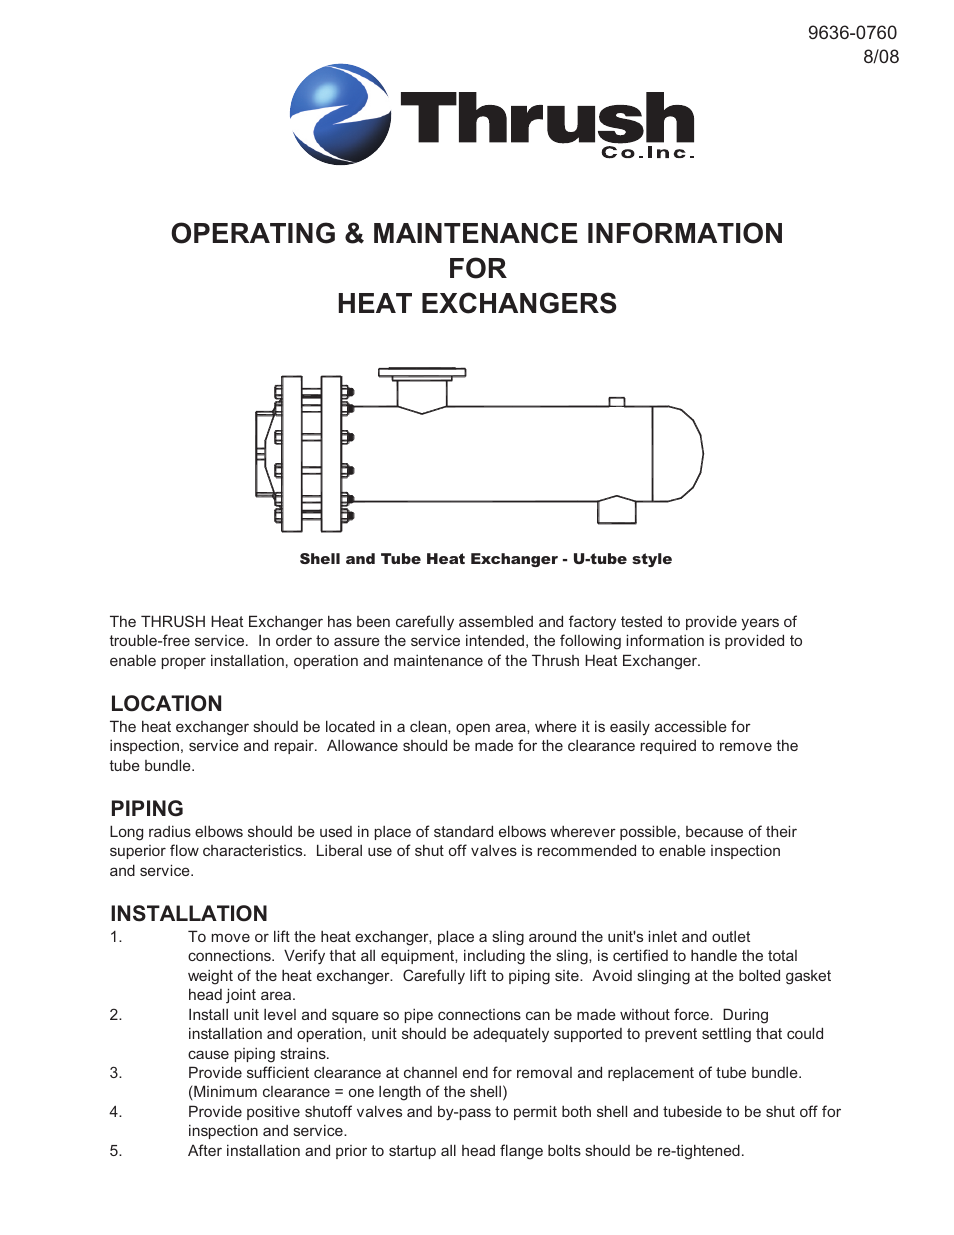 Water to Water u-tube Heat Exchangers